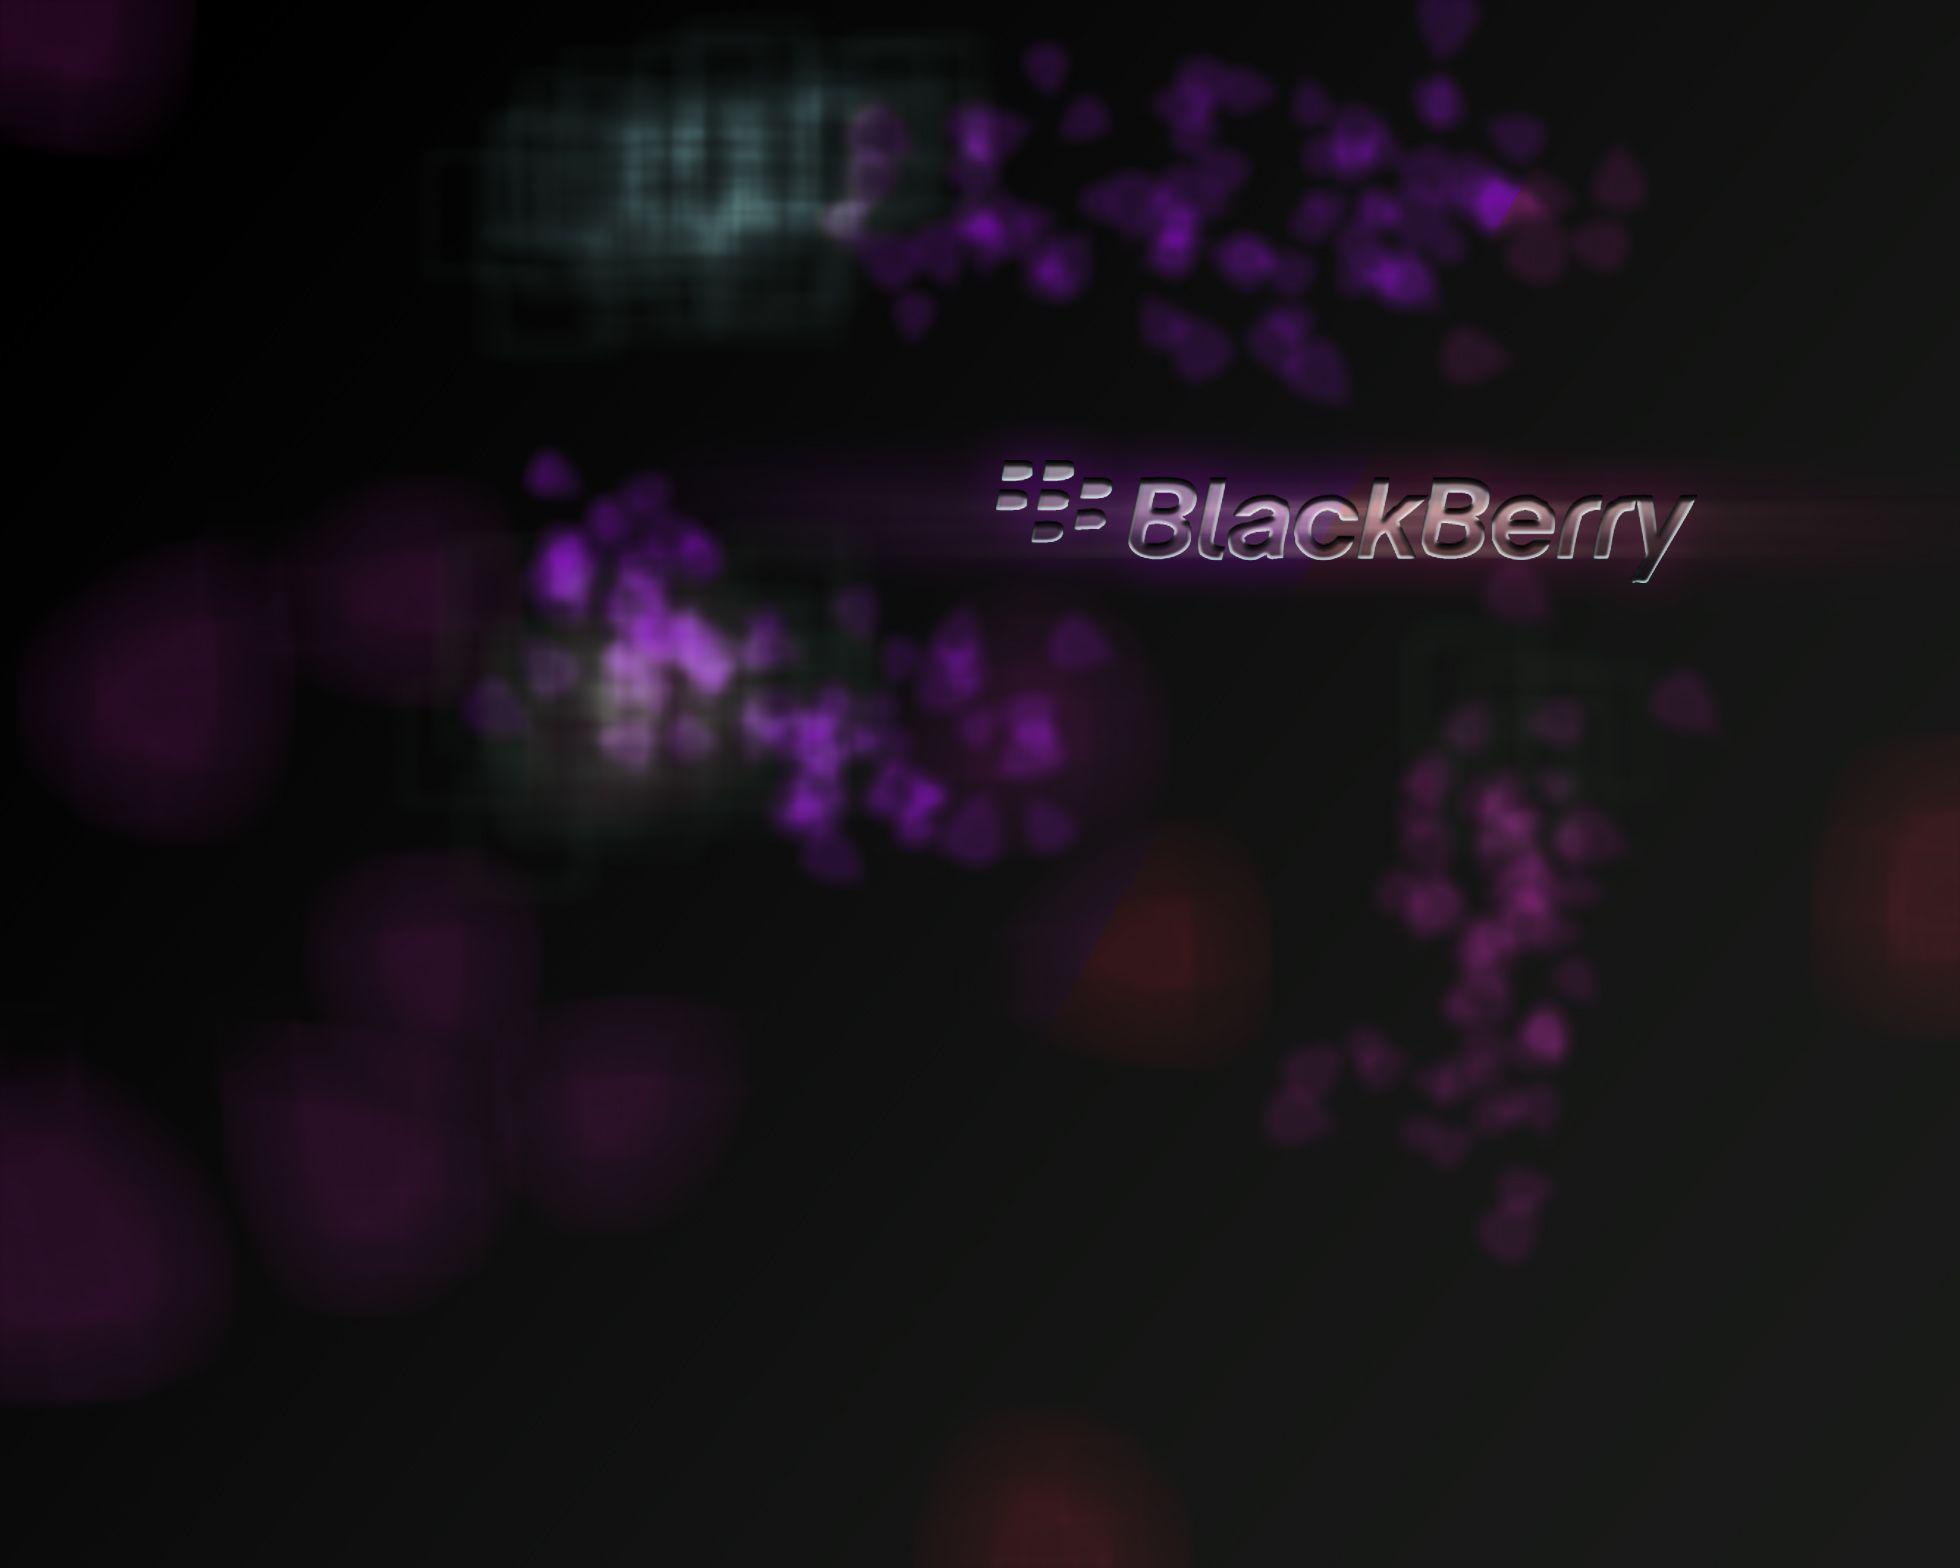 Wallpaper / Plant BlackBerry Wallpaper download, Best